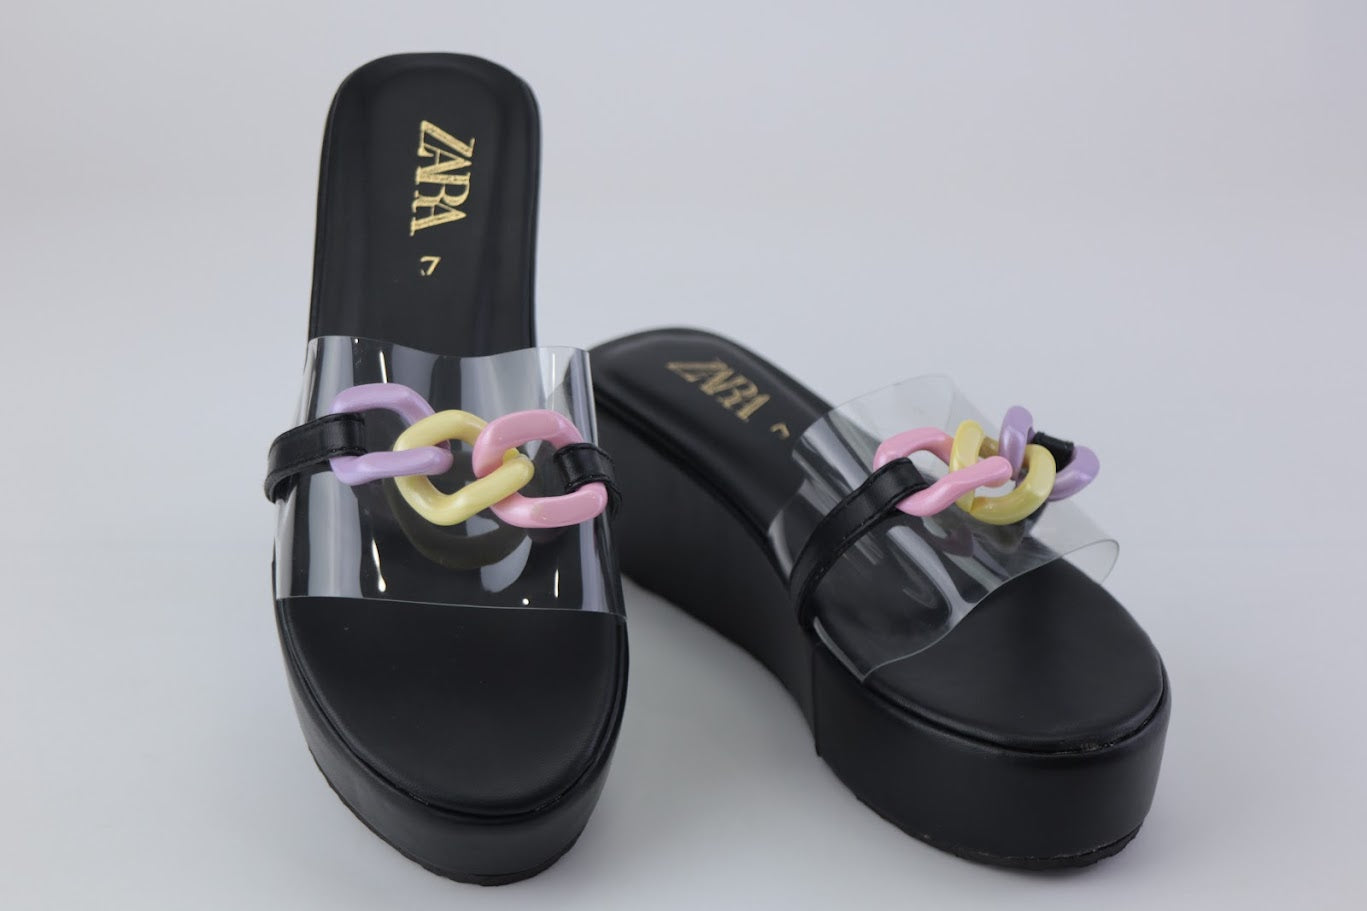 Zara Clear Transparent Wedge Sandals in Pakistan